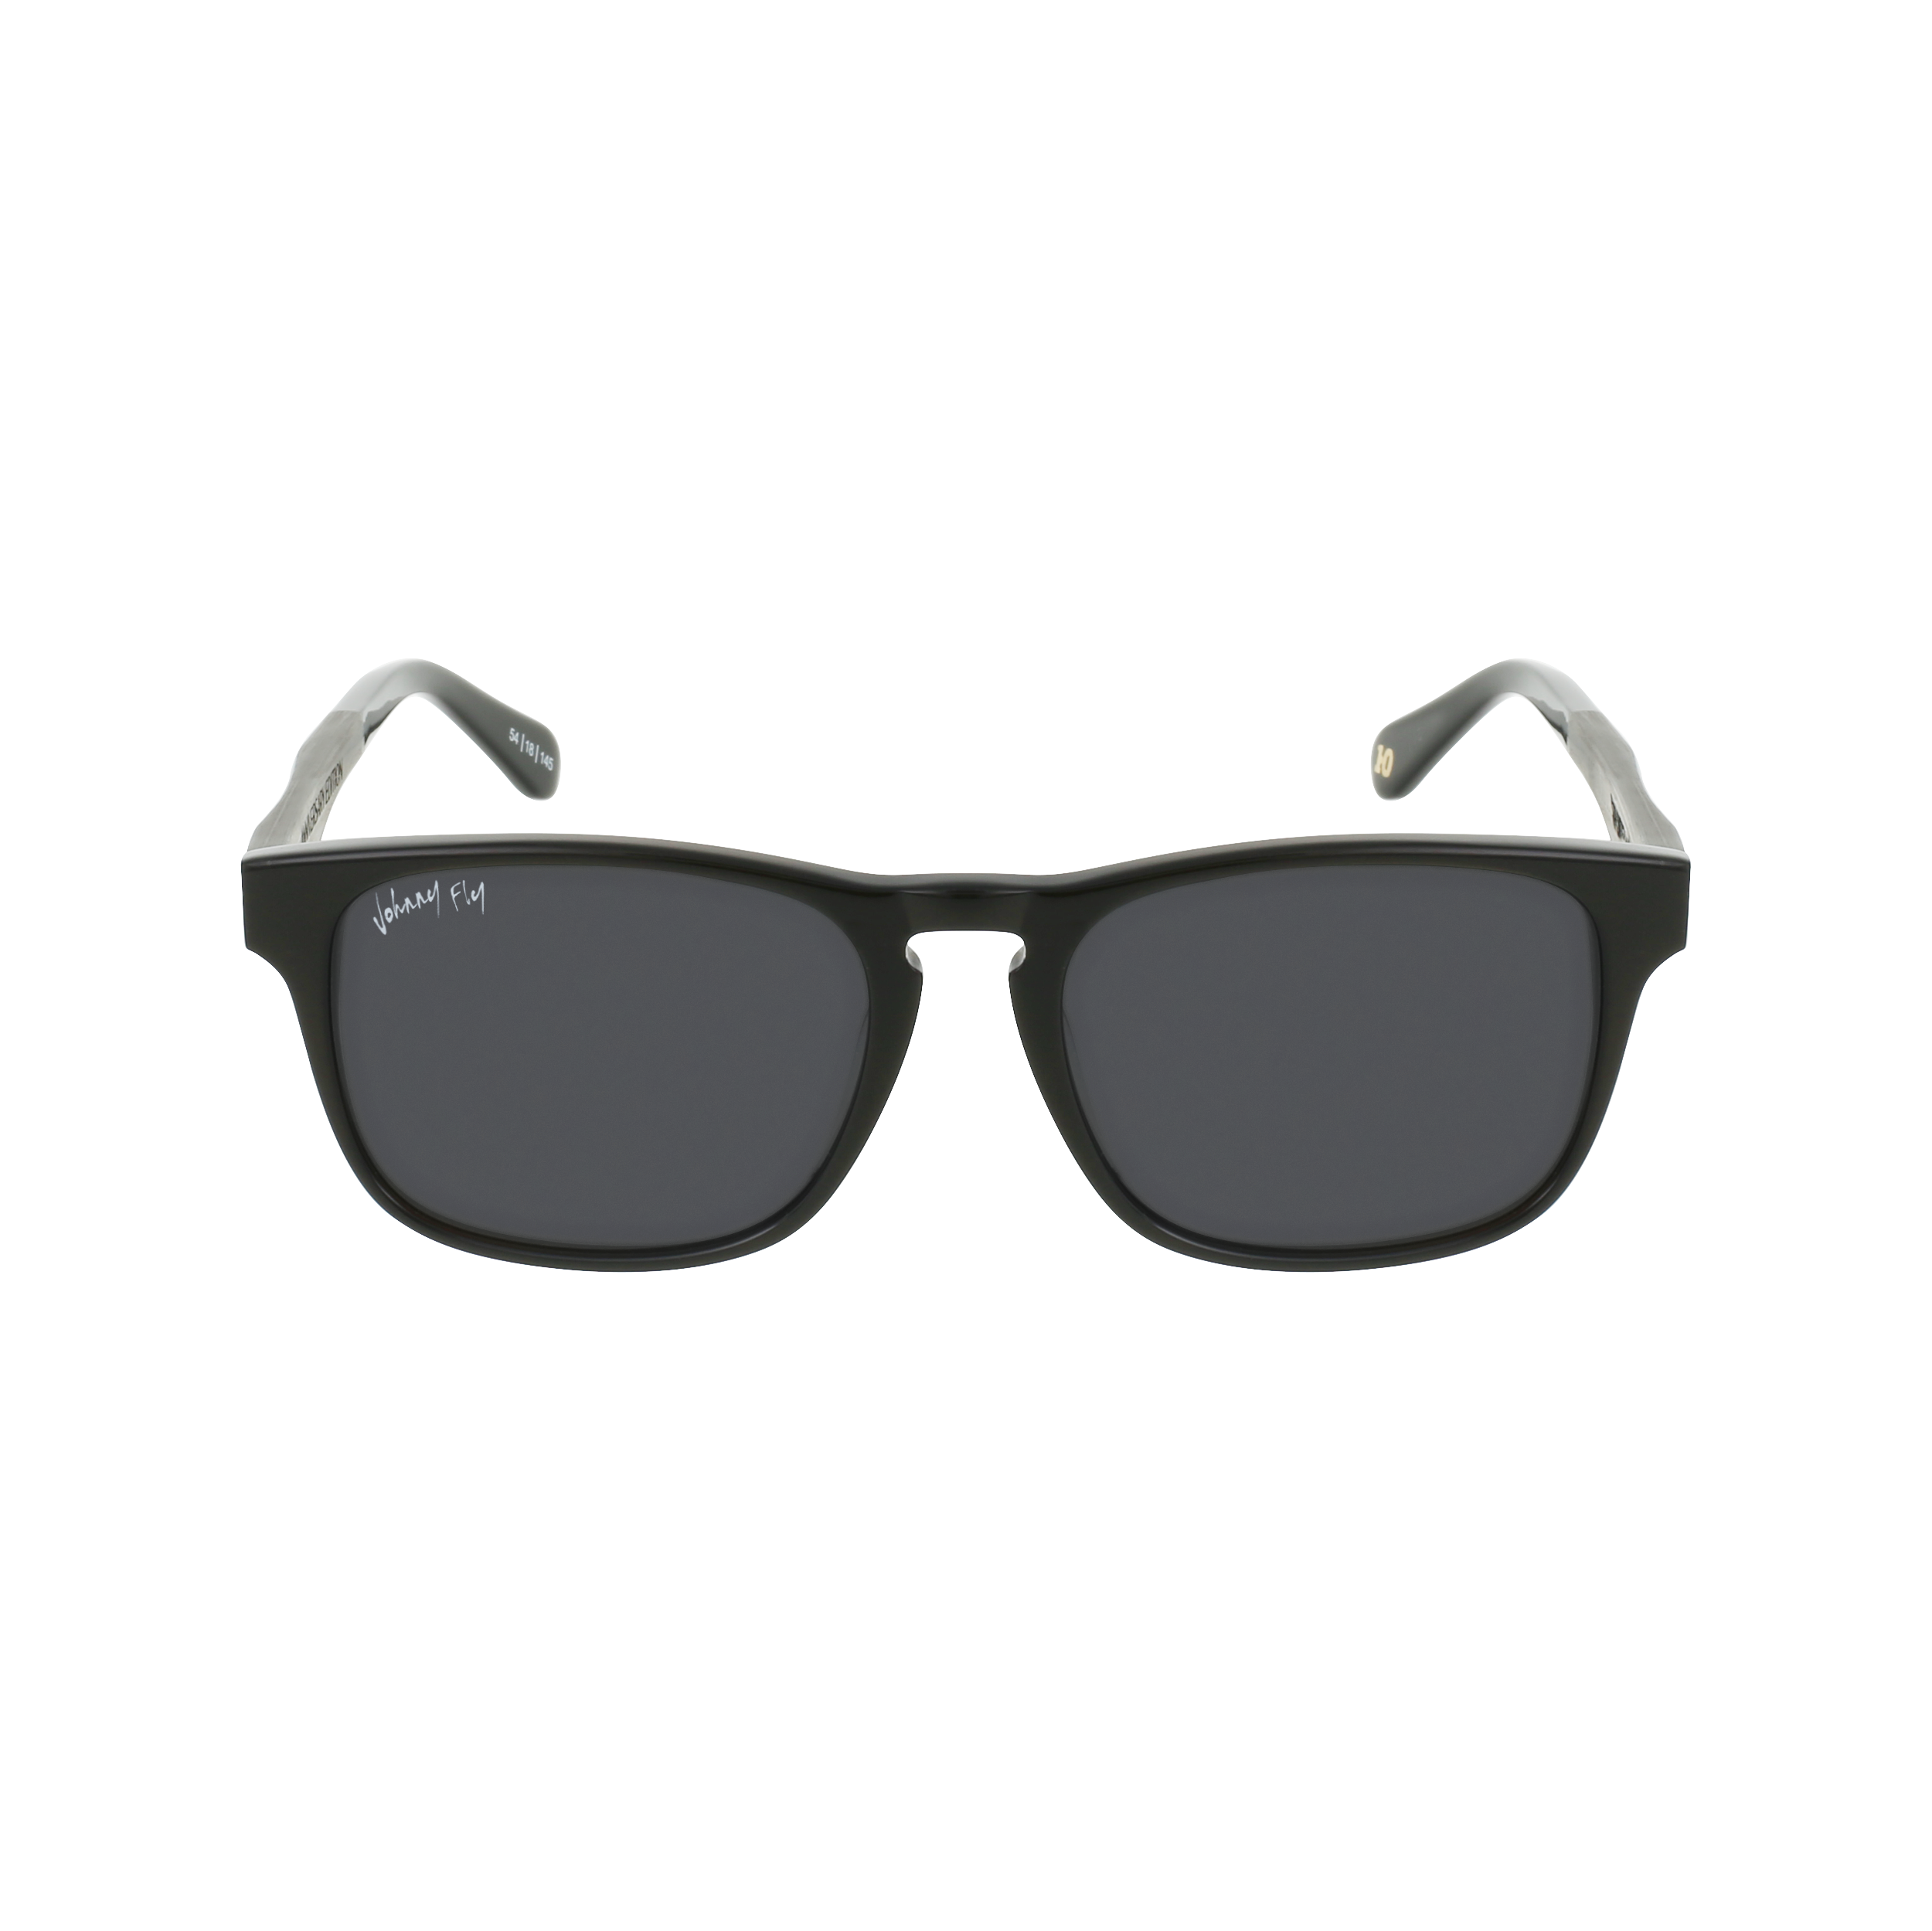 Splinter Polarized Sunglasses by Johnny Fly - Anniversary Pearl || Smoke Polarized 